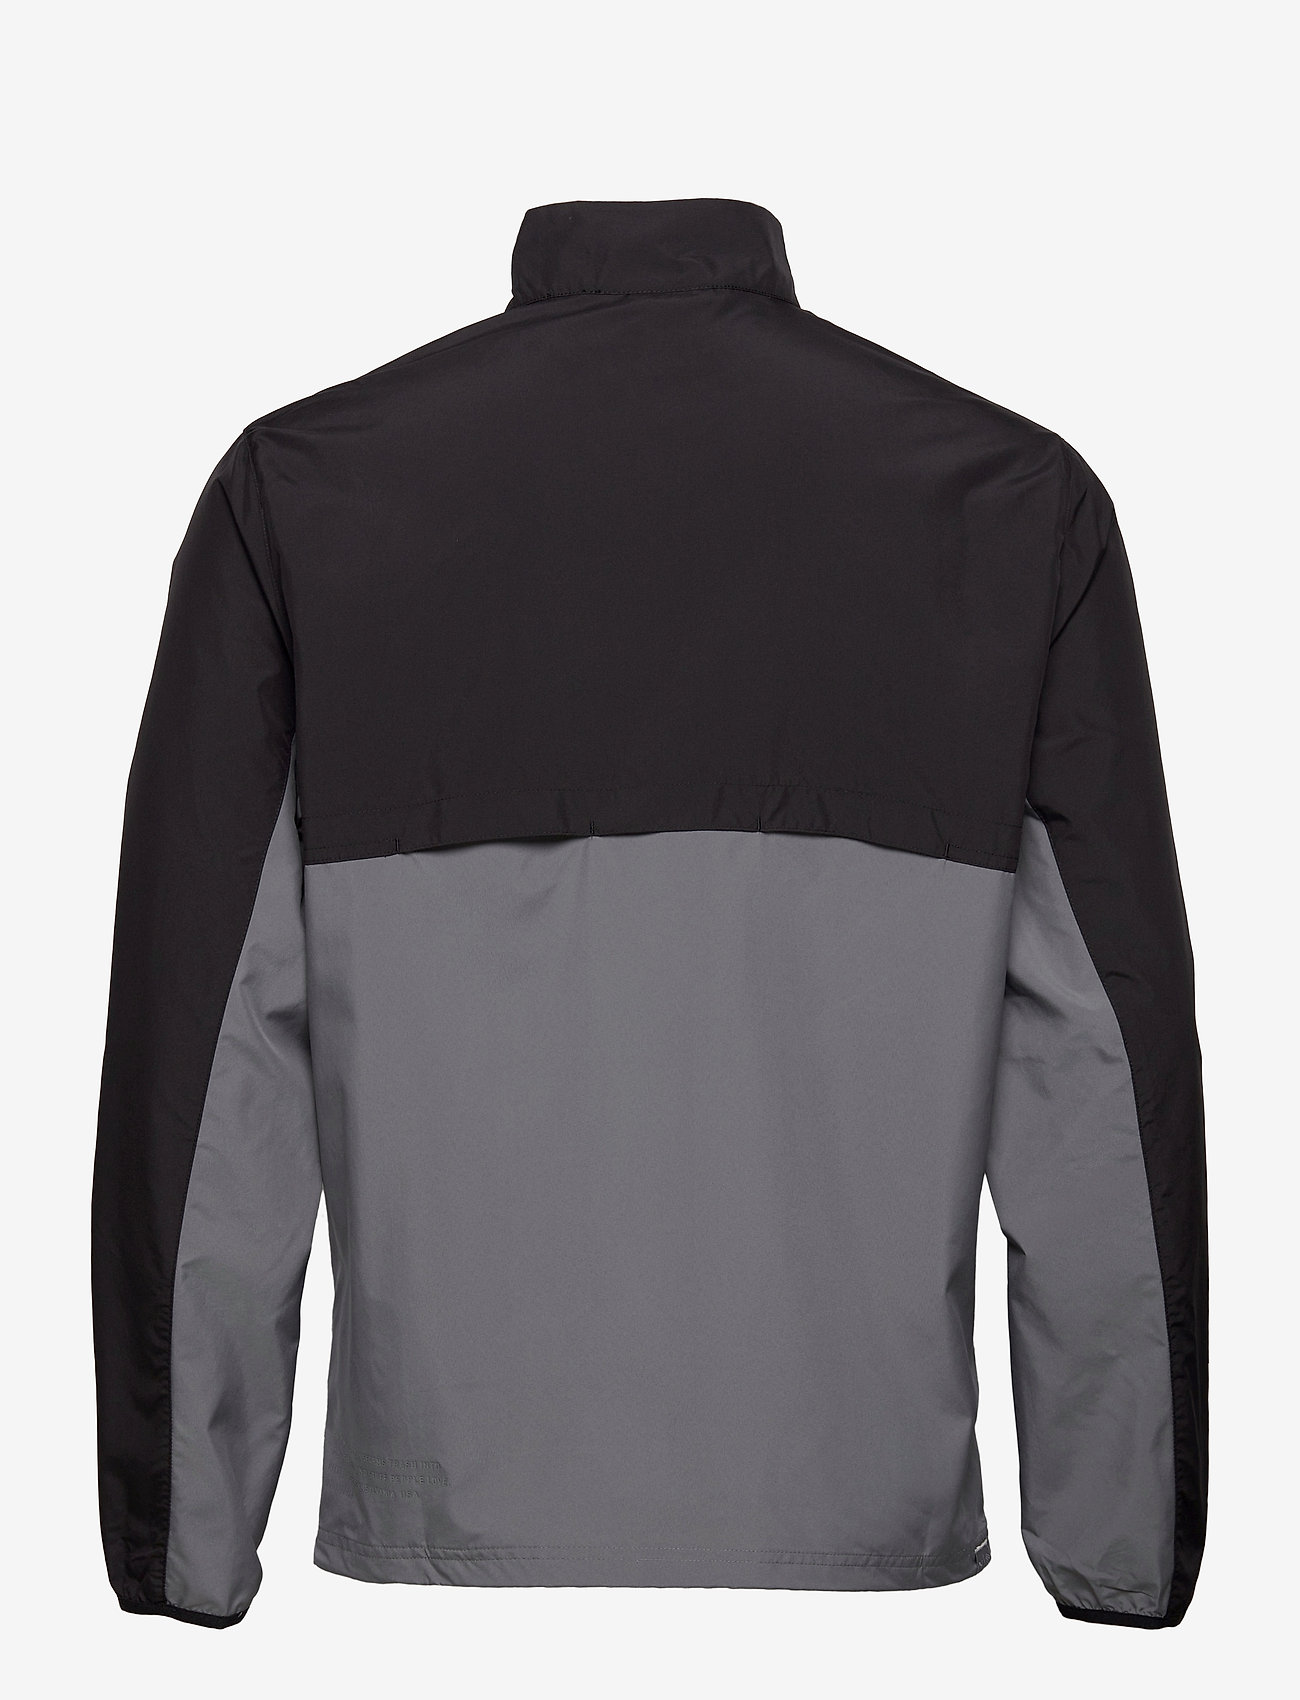 PUMA Golf - First Mile Wind Jacket - golf jackets - puma black-quiet shade - 1